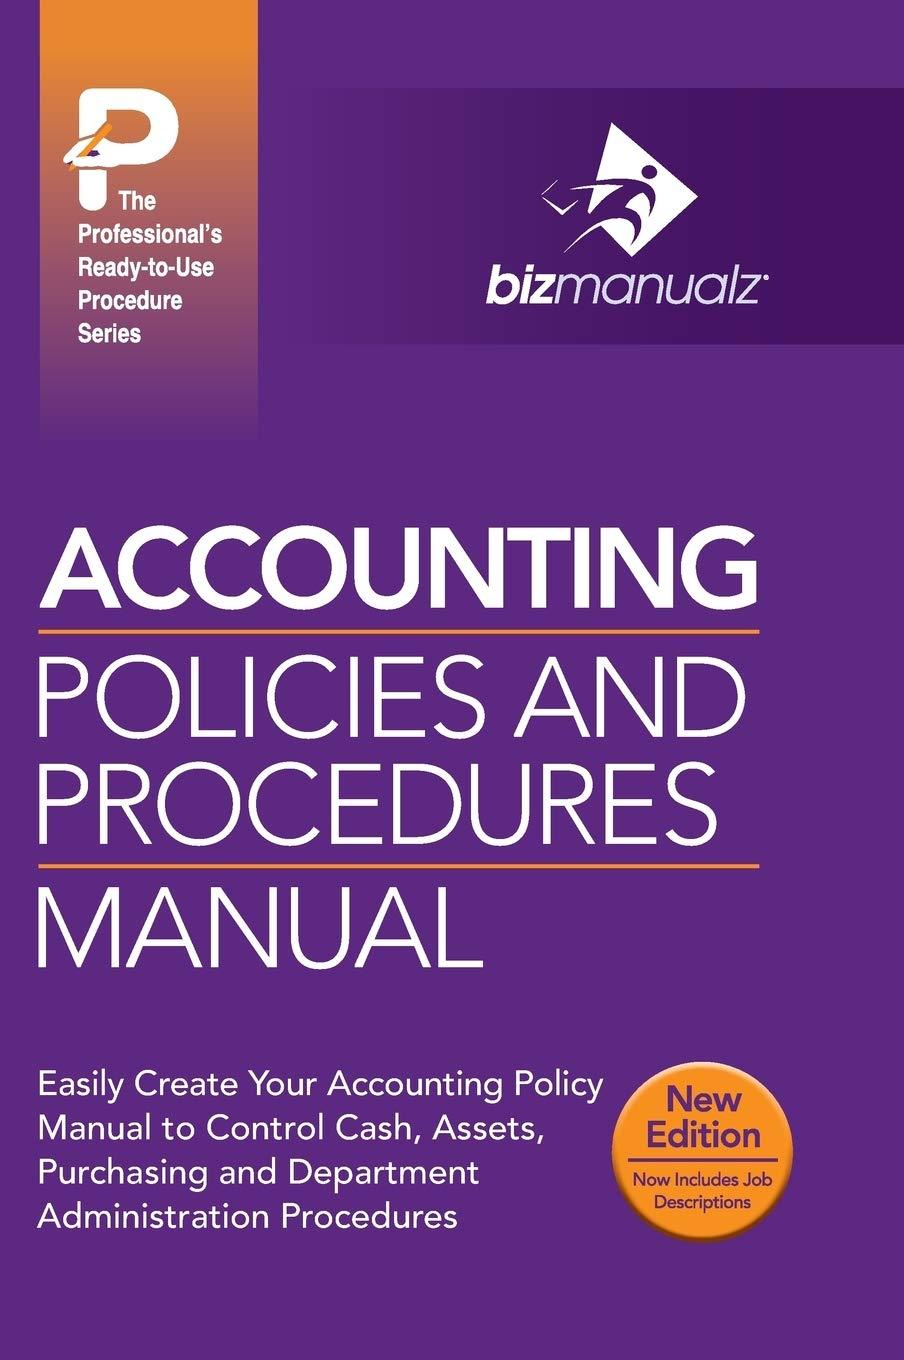 accounting policies and procedures manual 1st edition inc bizmanualz 1931591024, 978-1931591027